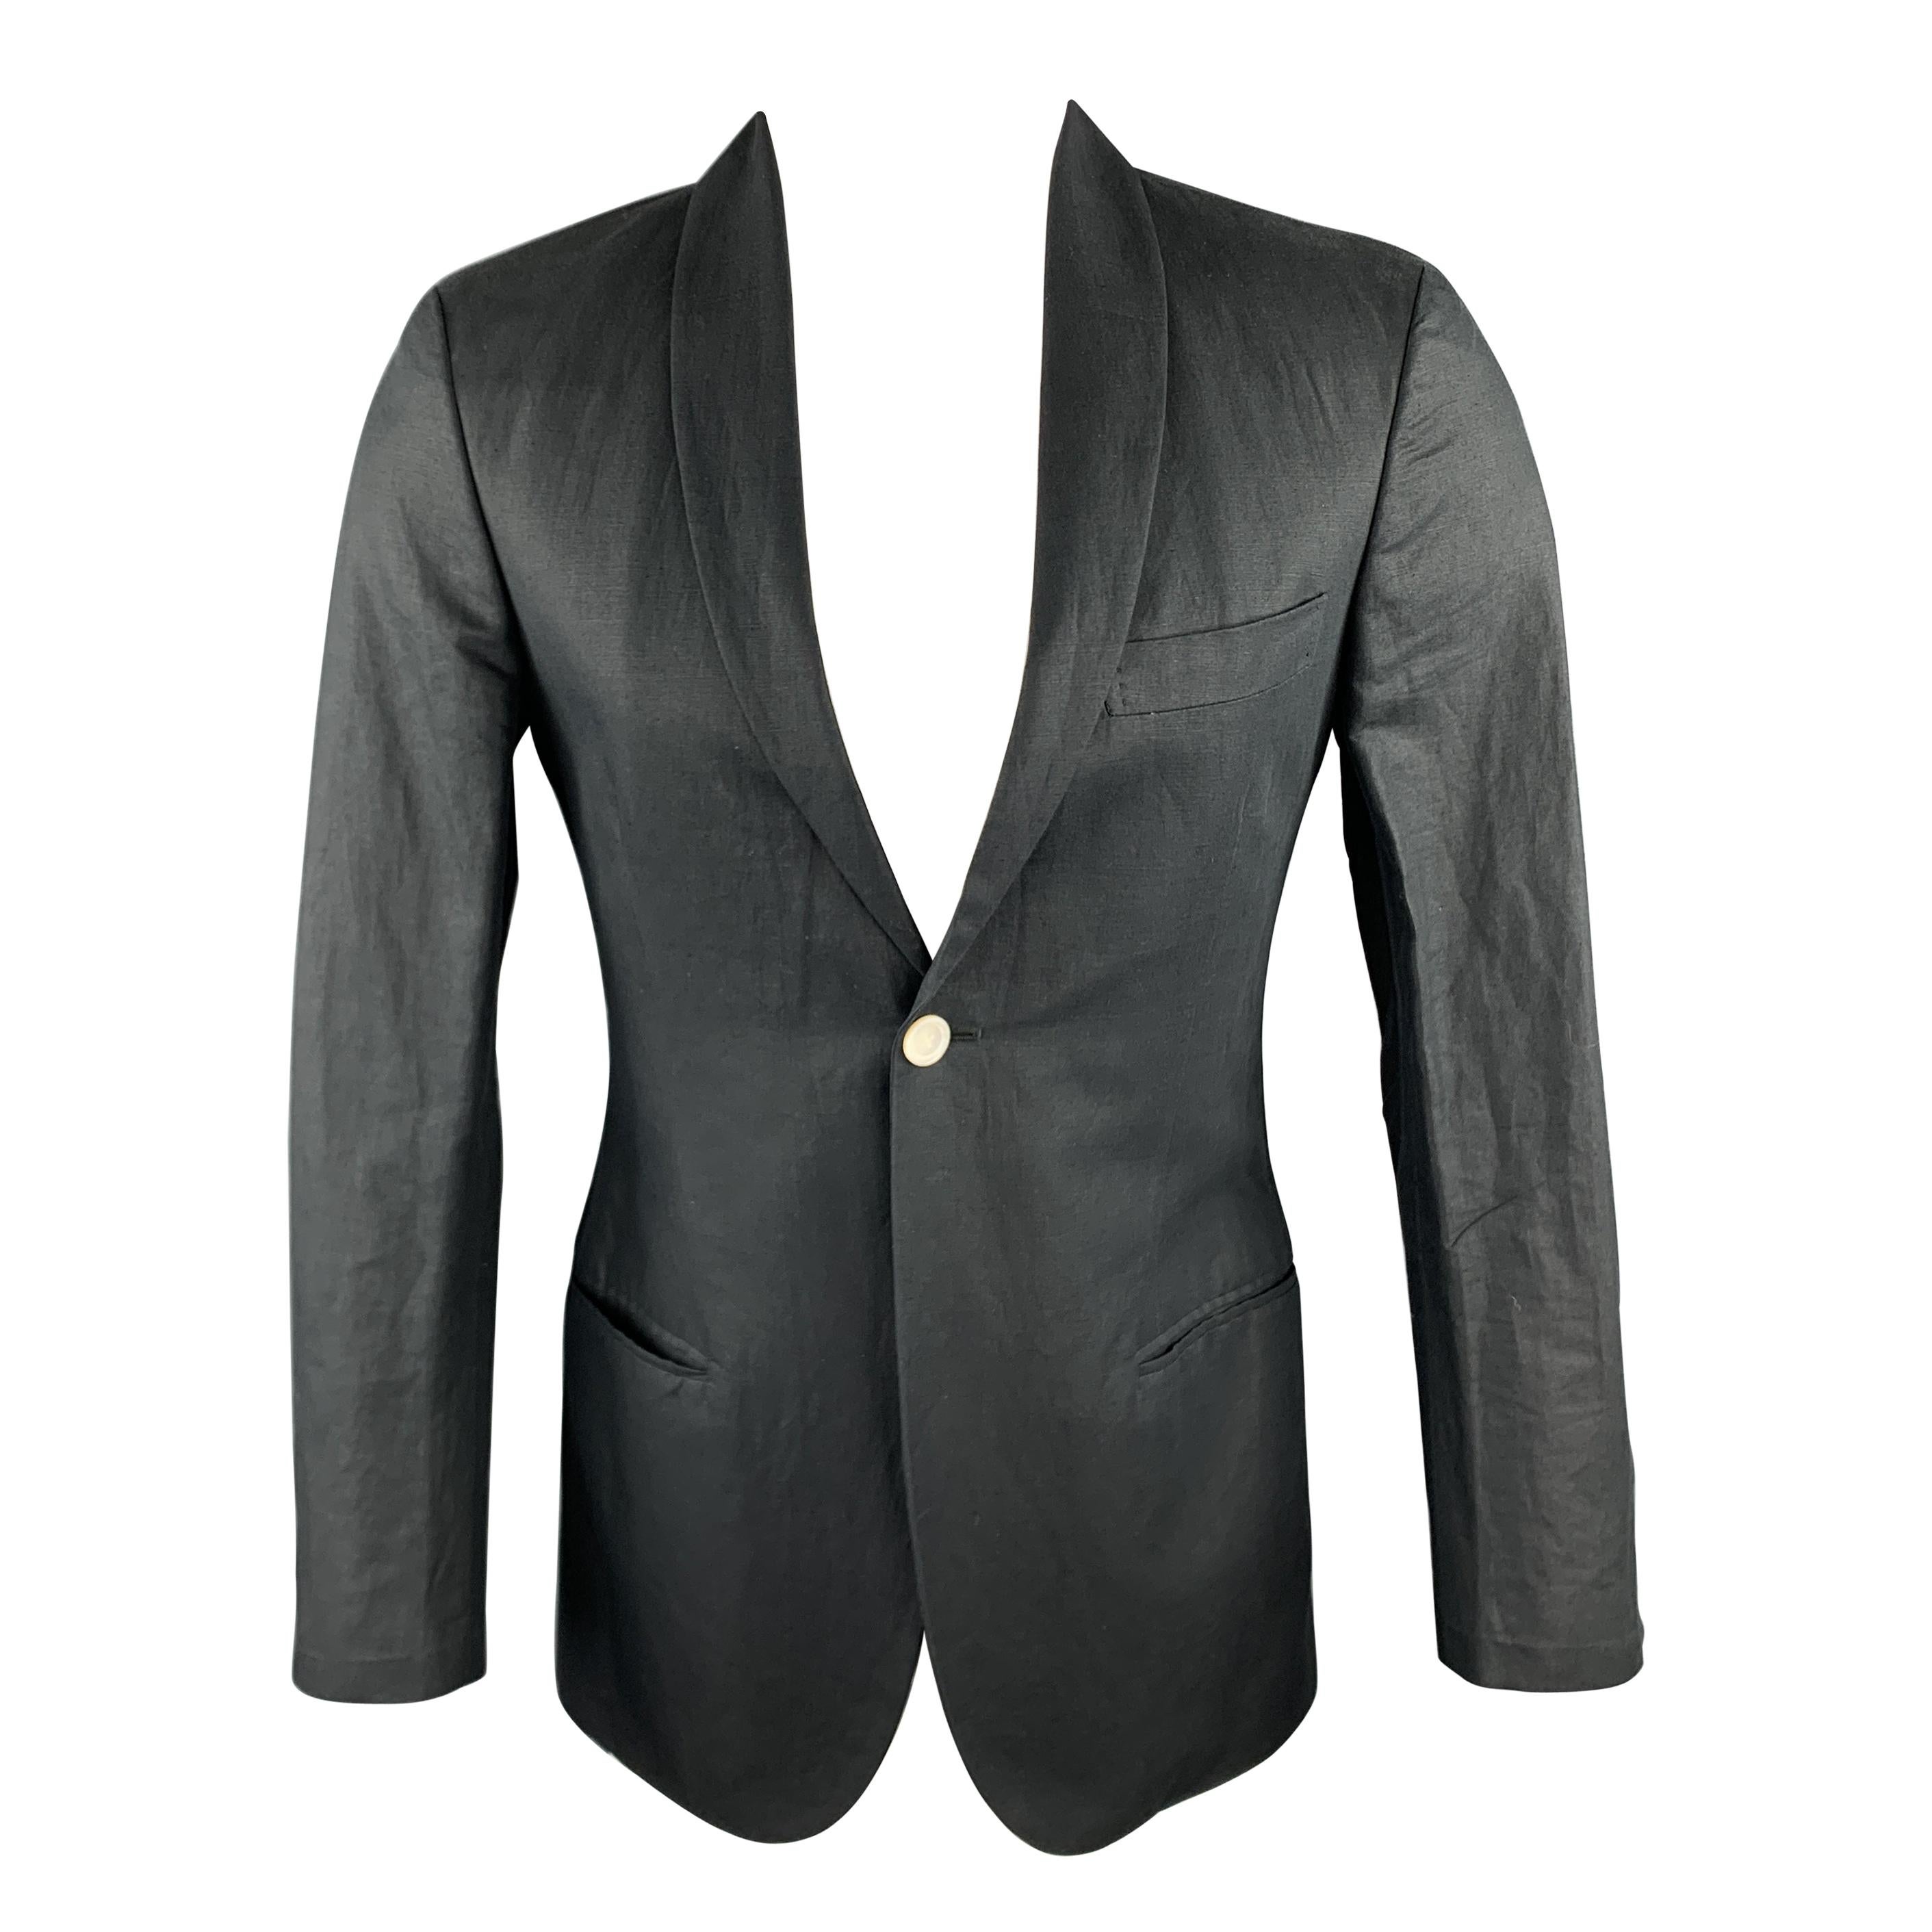 MICHAEL BASTIAN Size 36 Navy Linen / Cotton Shawl Collar Sport Coat